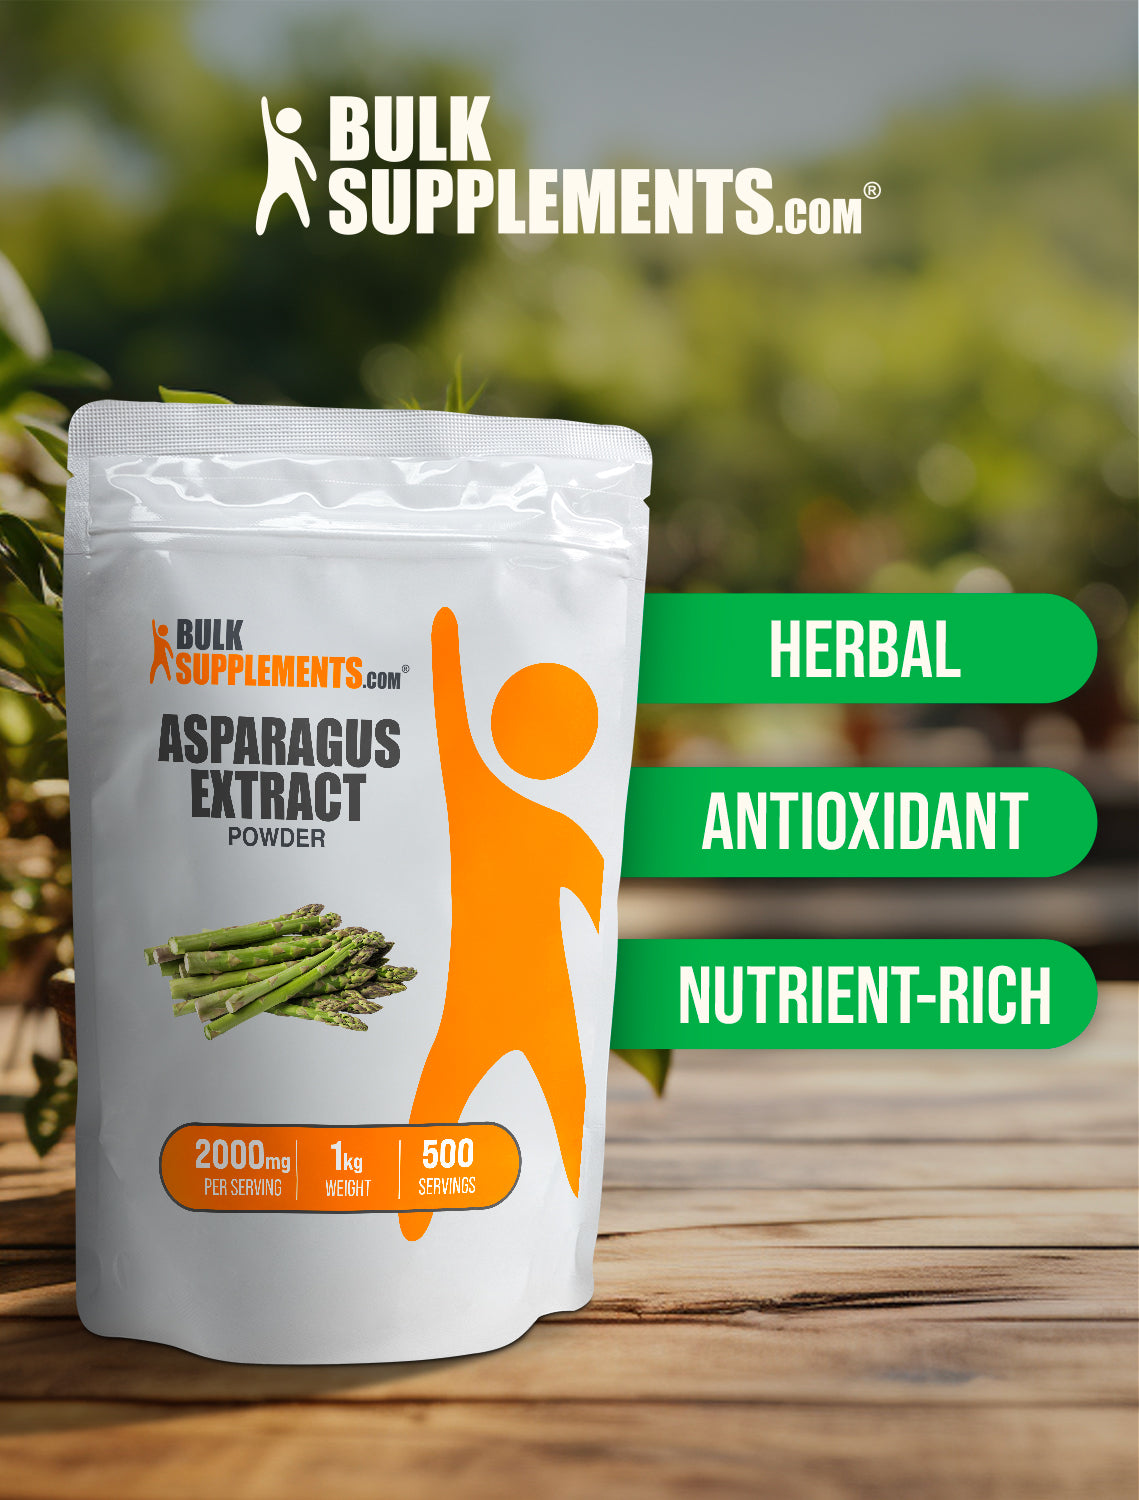 Asparagus Extract powder keyword image 1kg